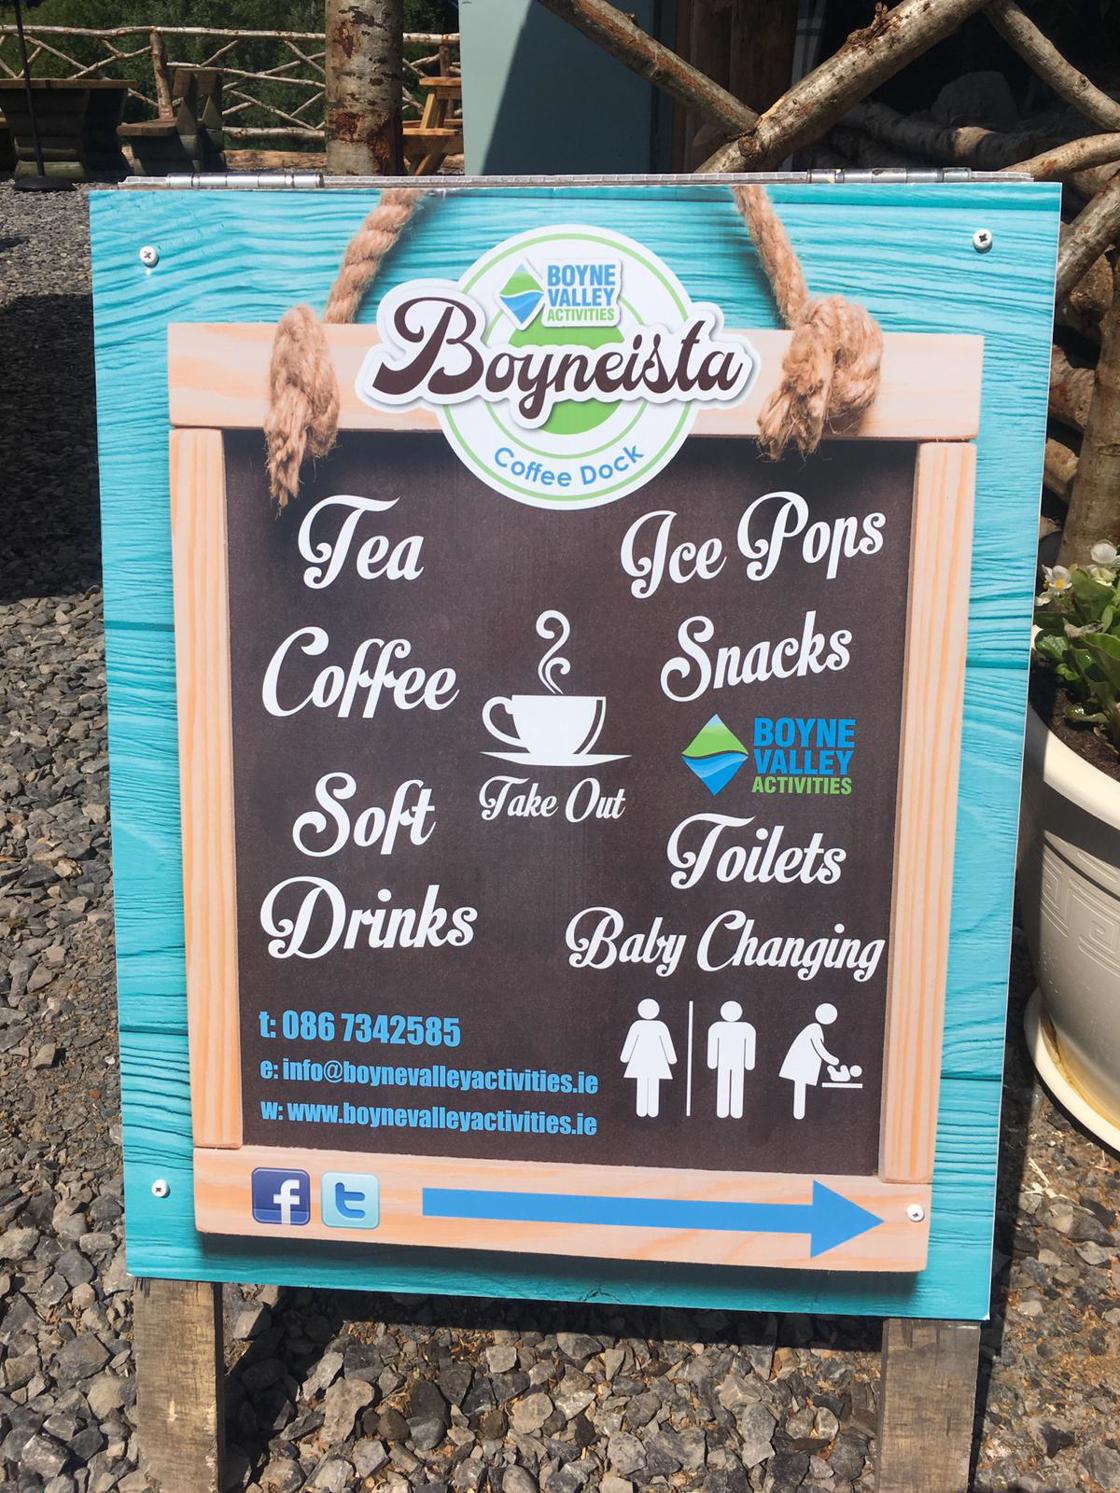 Boyneista Coffee Shop_Boyne Valley Activities